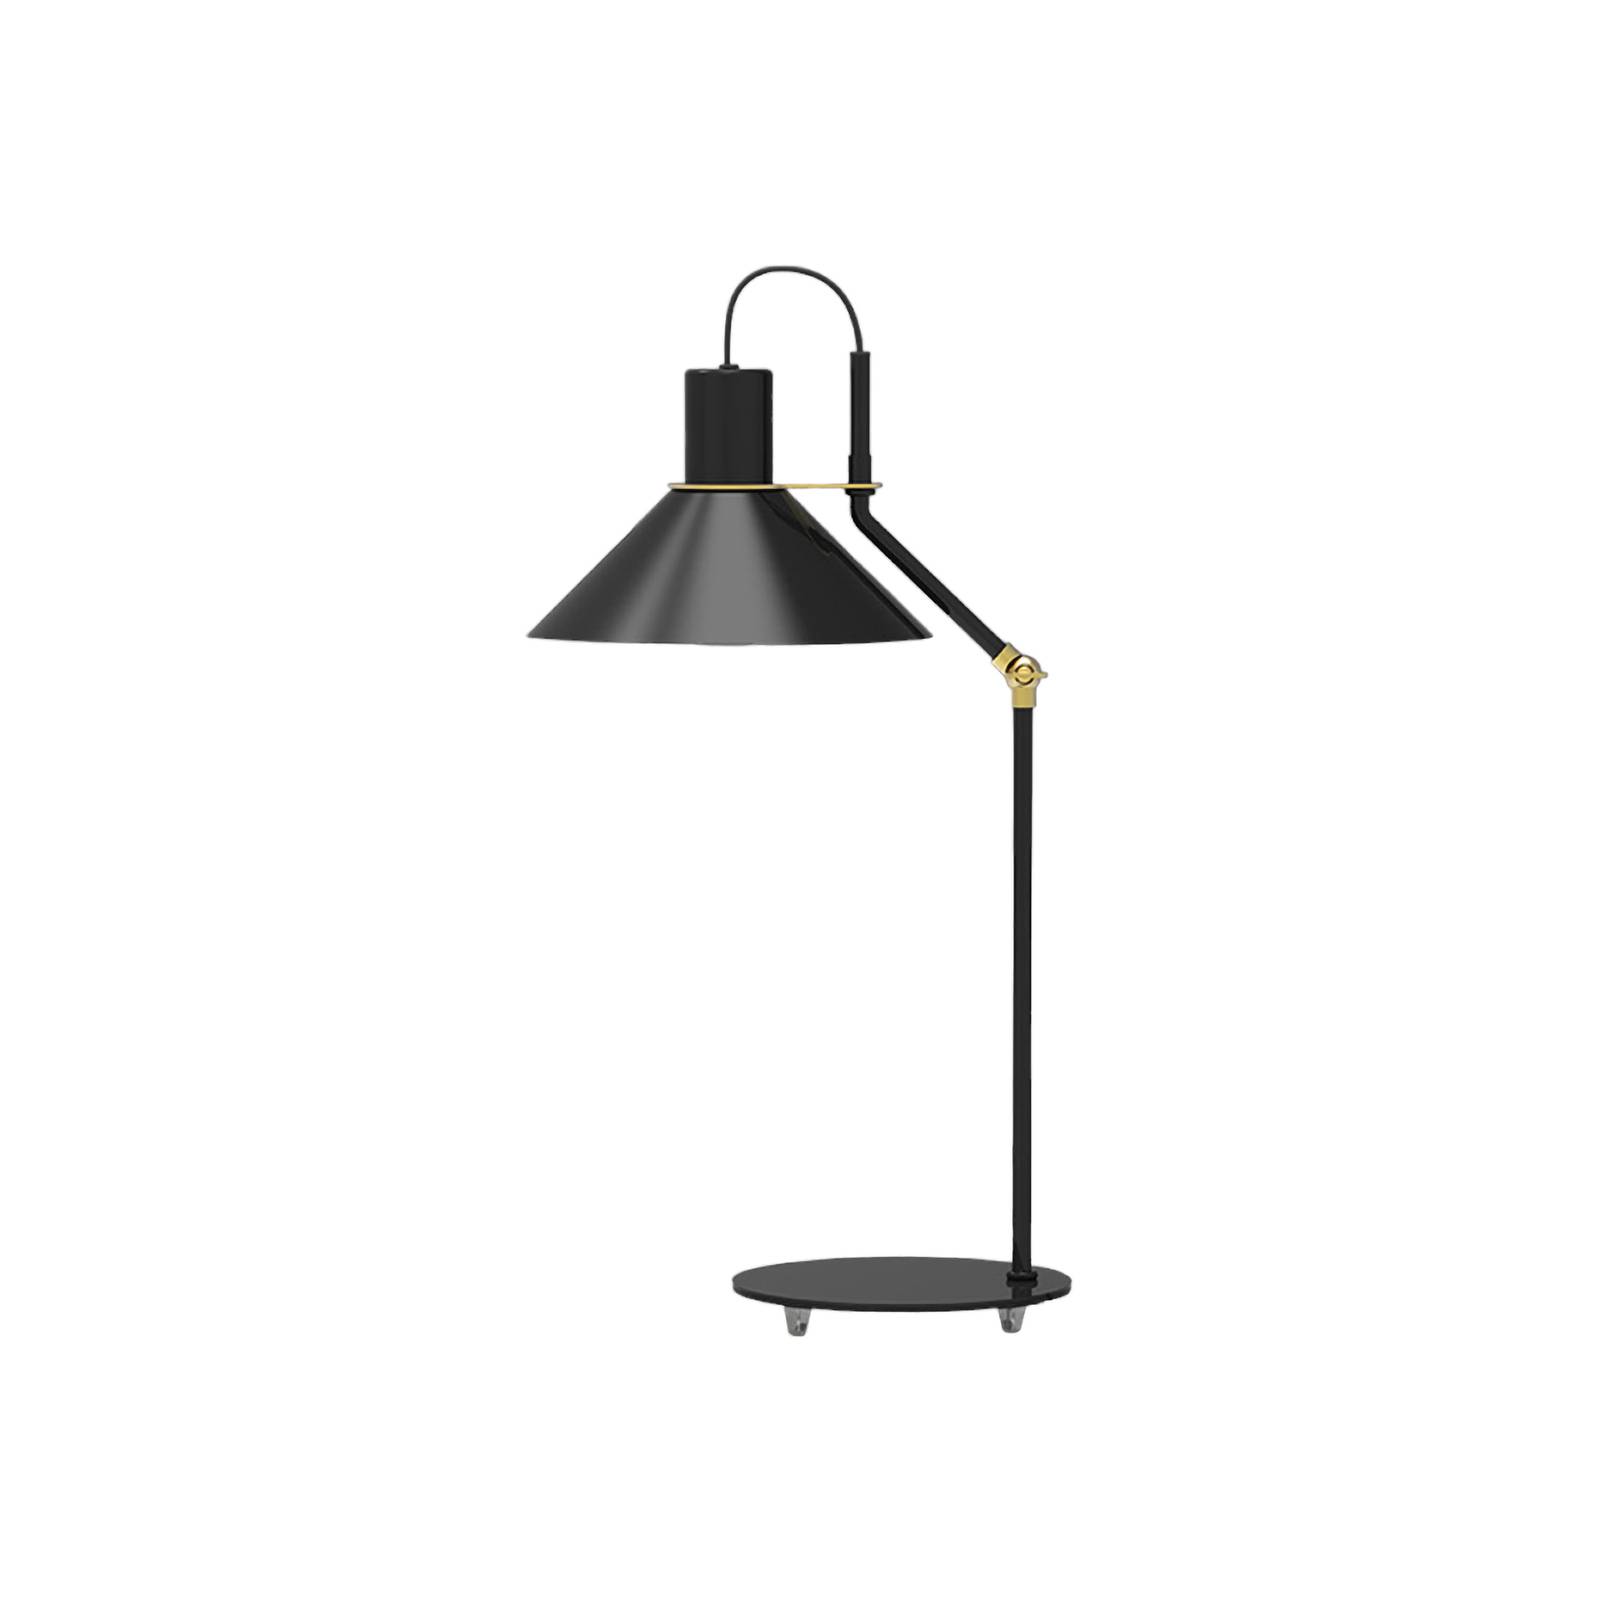 Aluminor Zinga Tischlampe, schwarz, Messingdetail von Aluminor